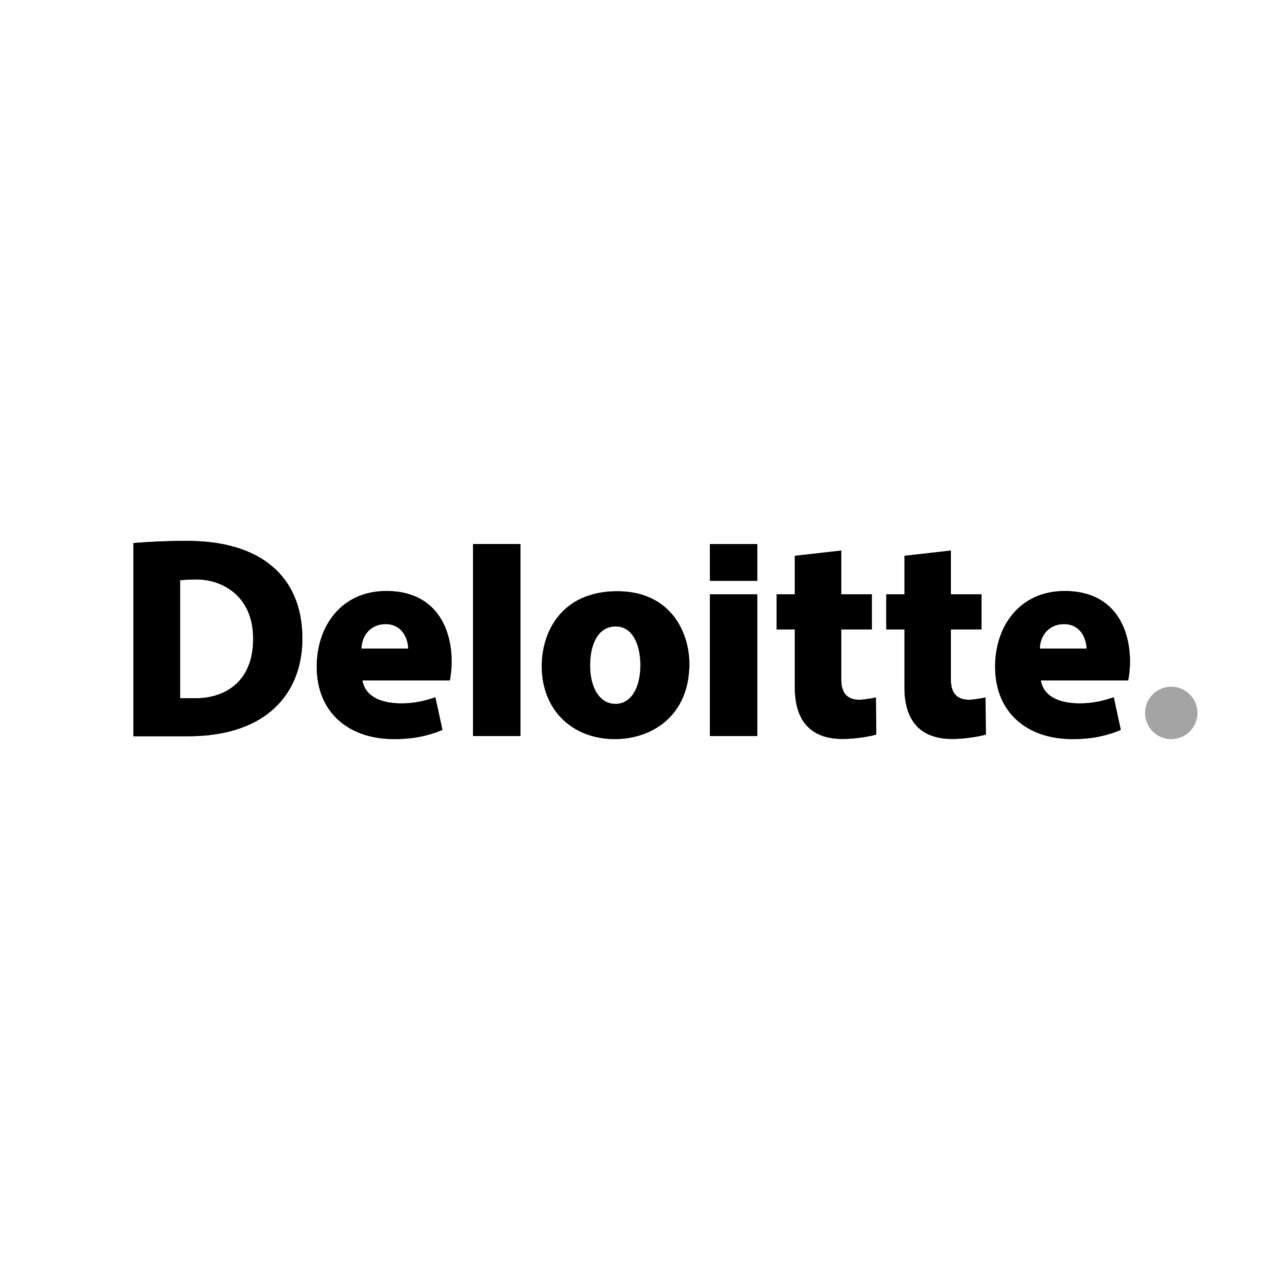 deloitte-logo-black-and-white